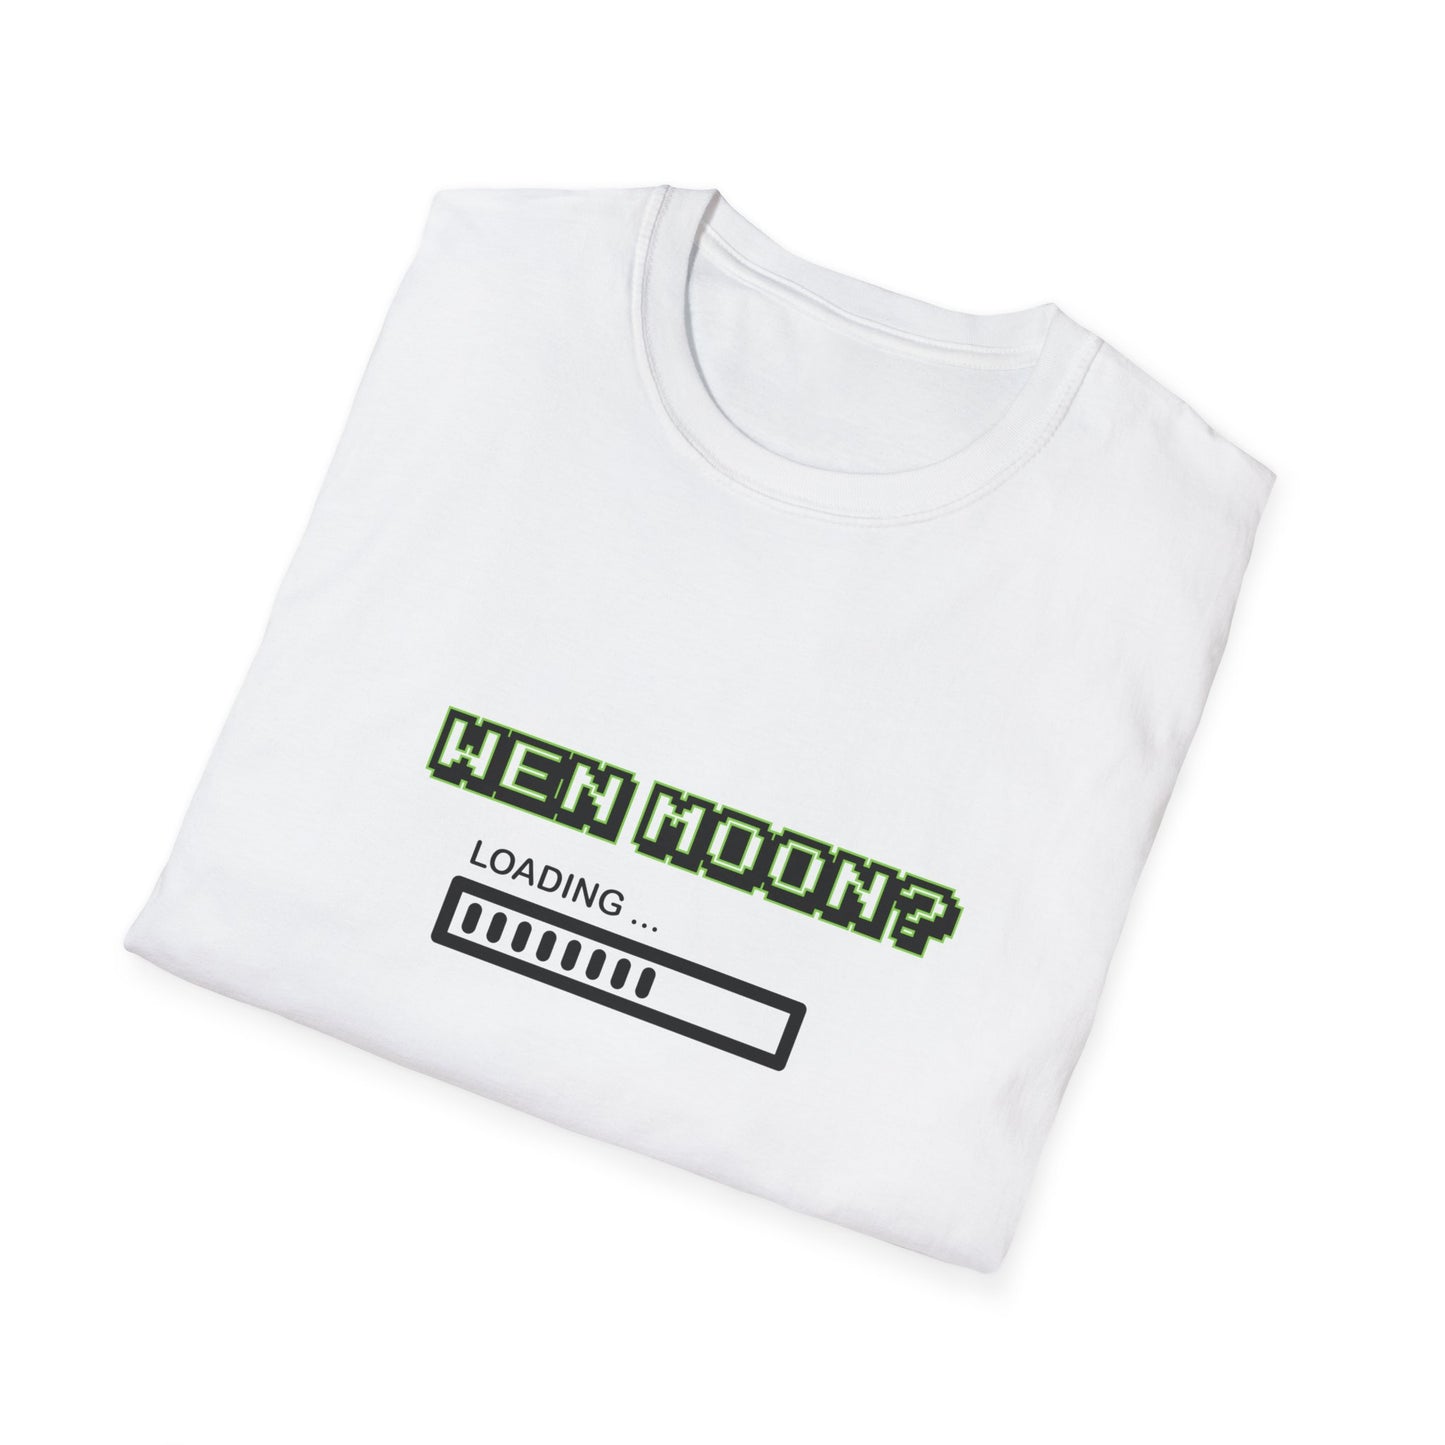 'Wen Moon' Unisex Softstyle T-Shirt